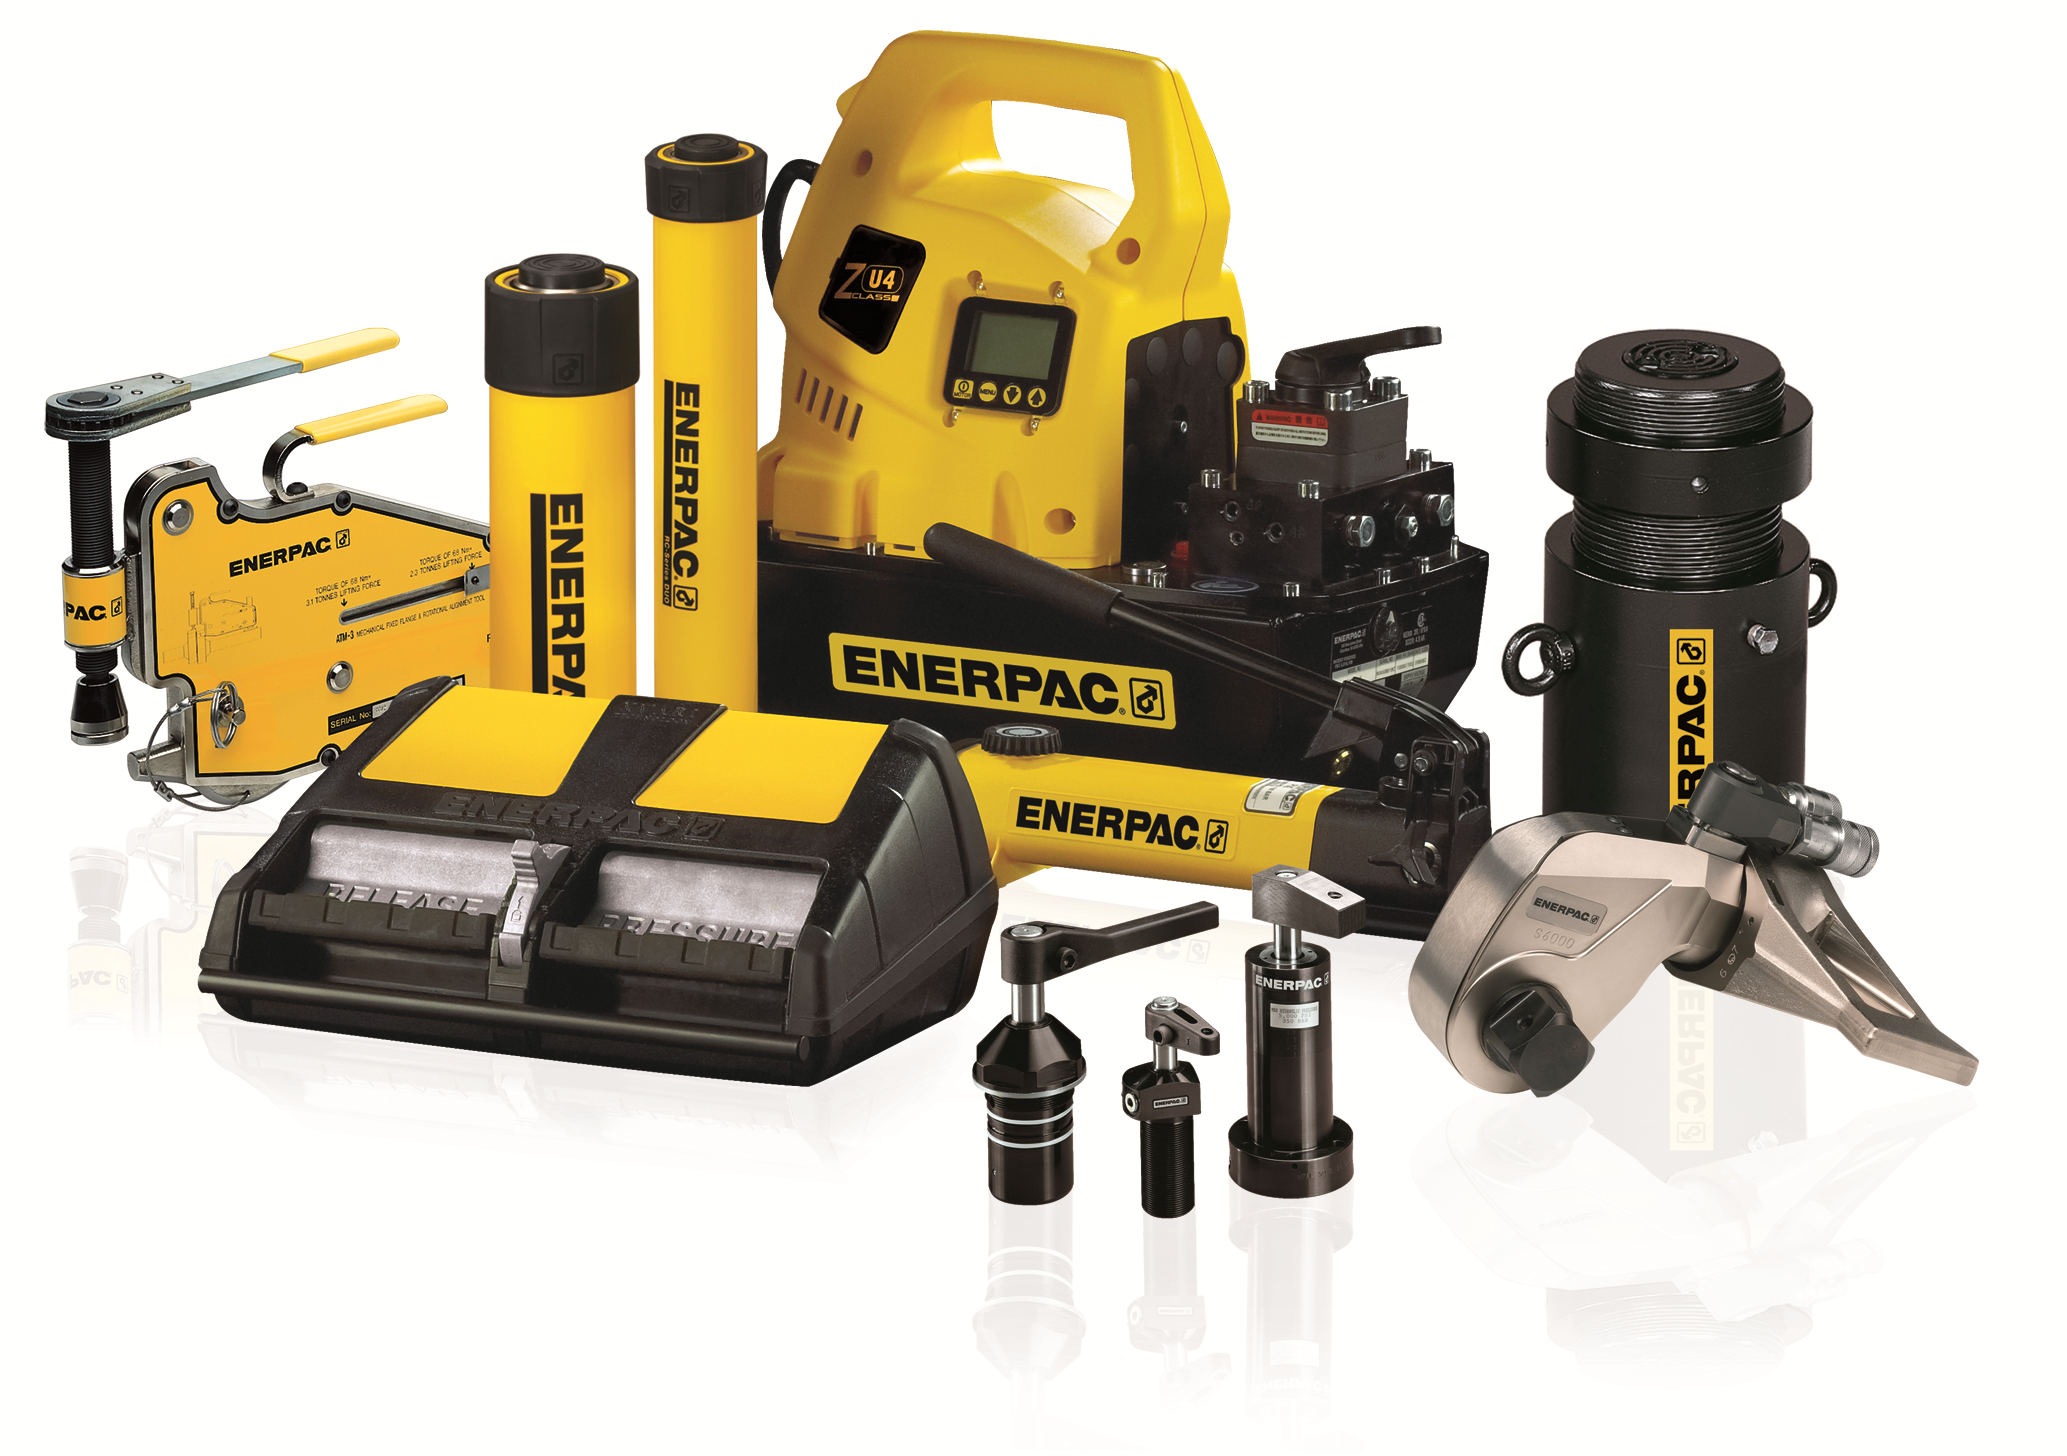 enerpac_hydraulic_tools